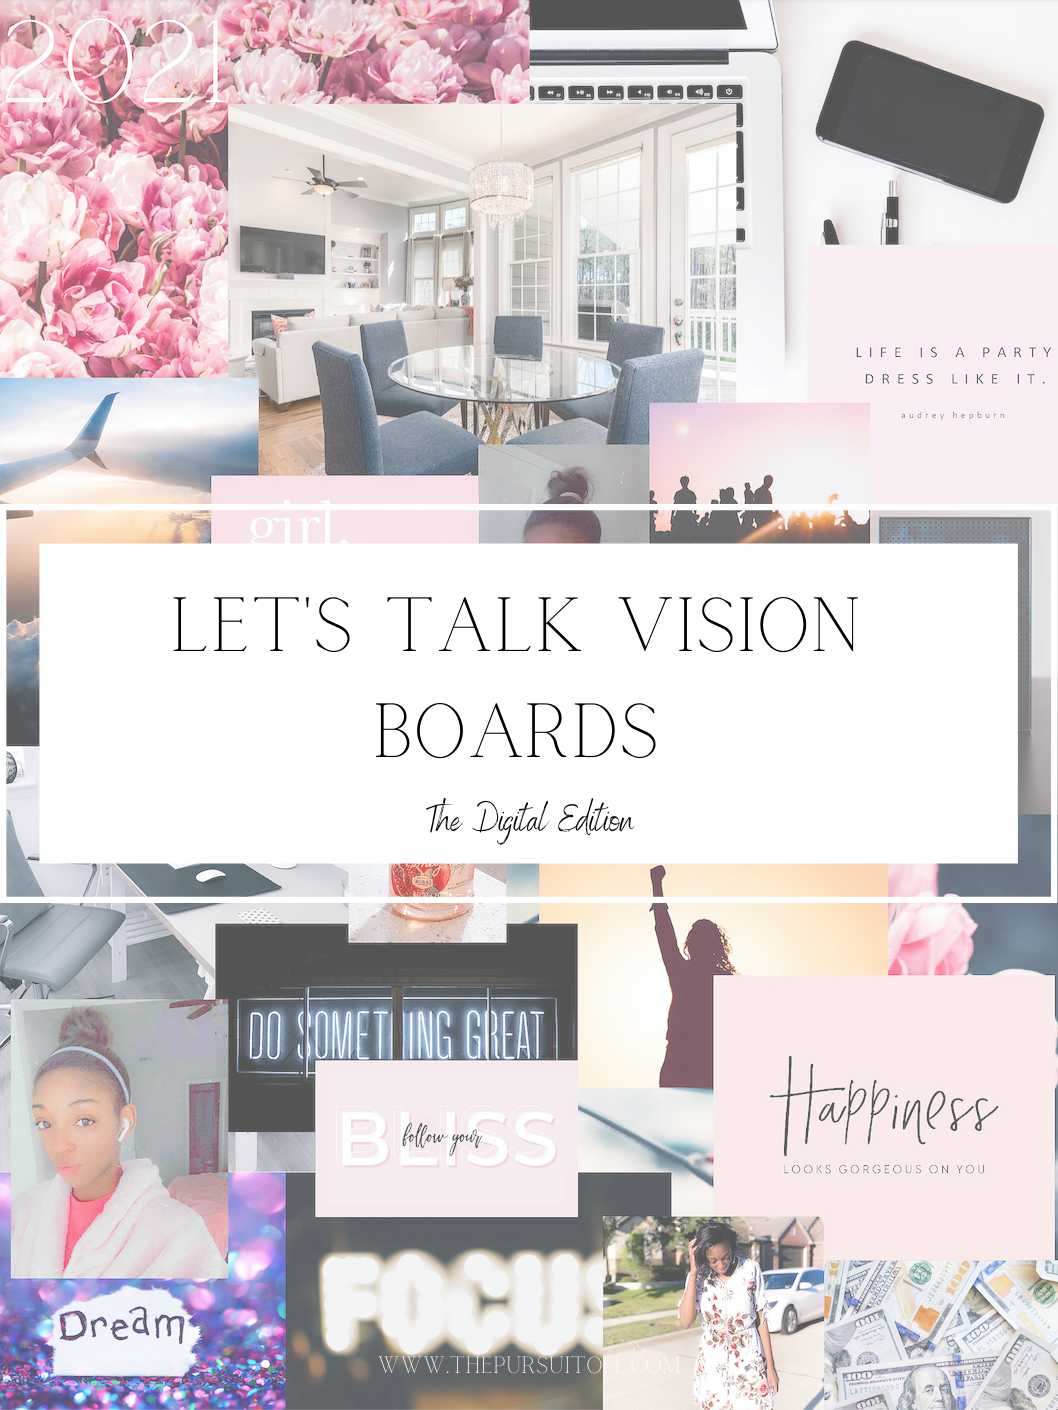 The Pursuit of L; Let's Talk Vision Boards